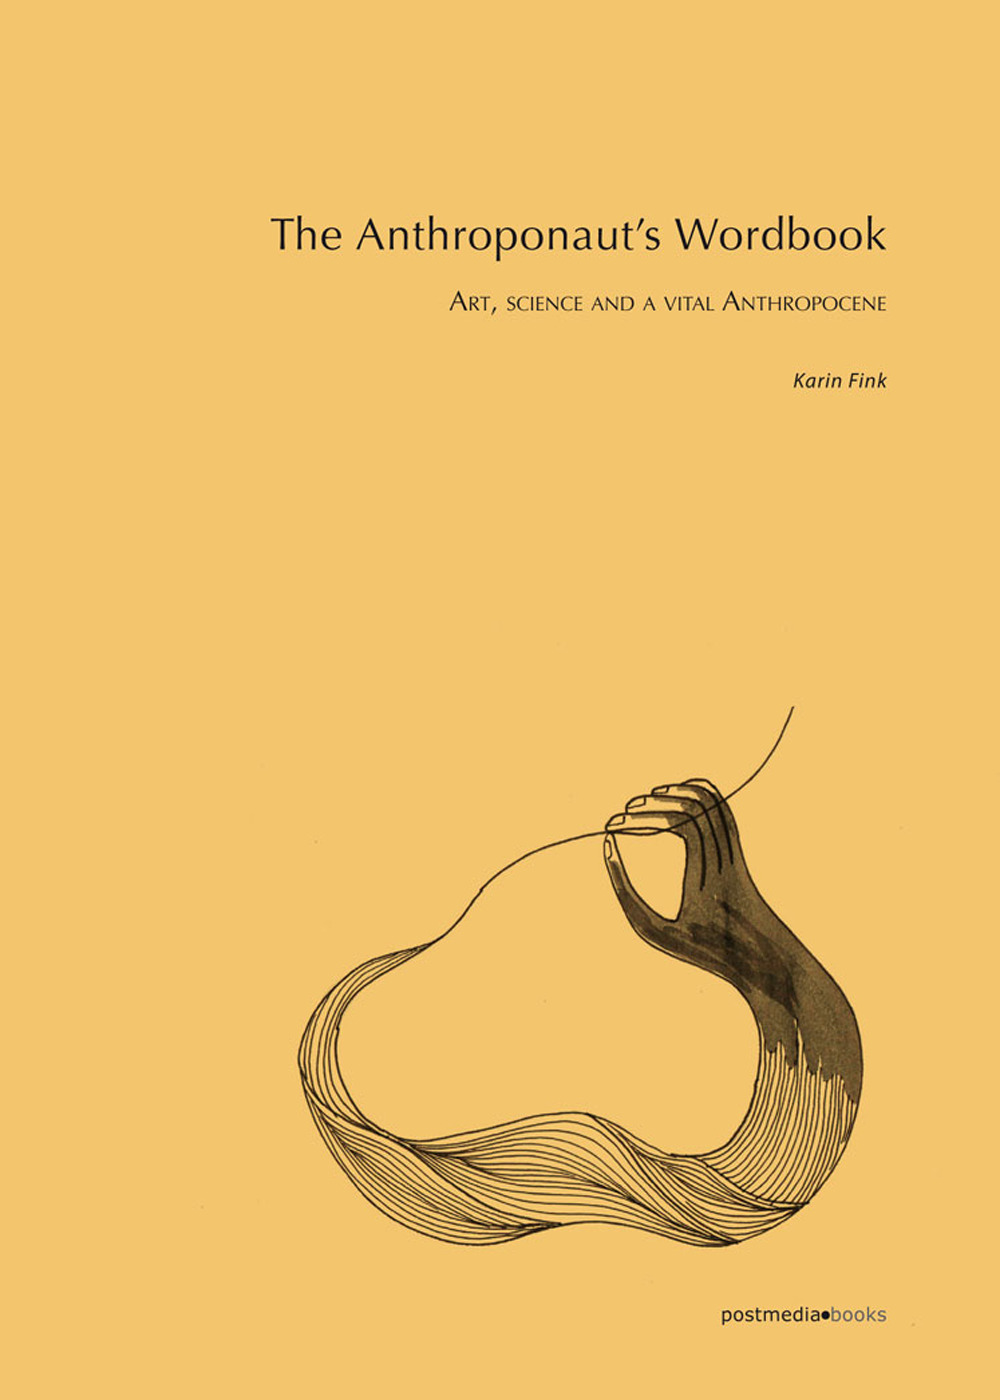 The anthroponaut's wordbook. Art, science and a vital Anthropocene